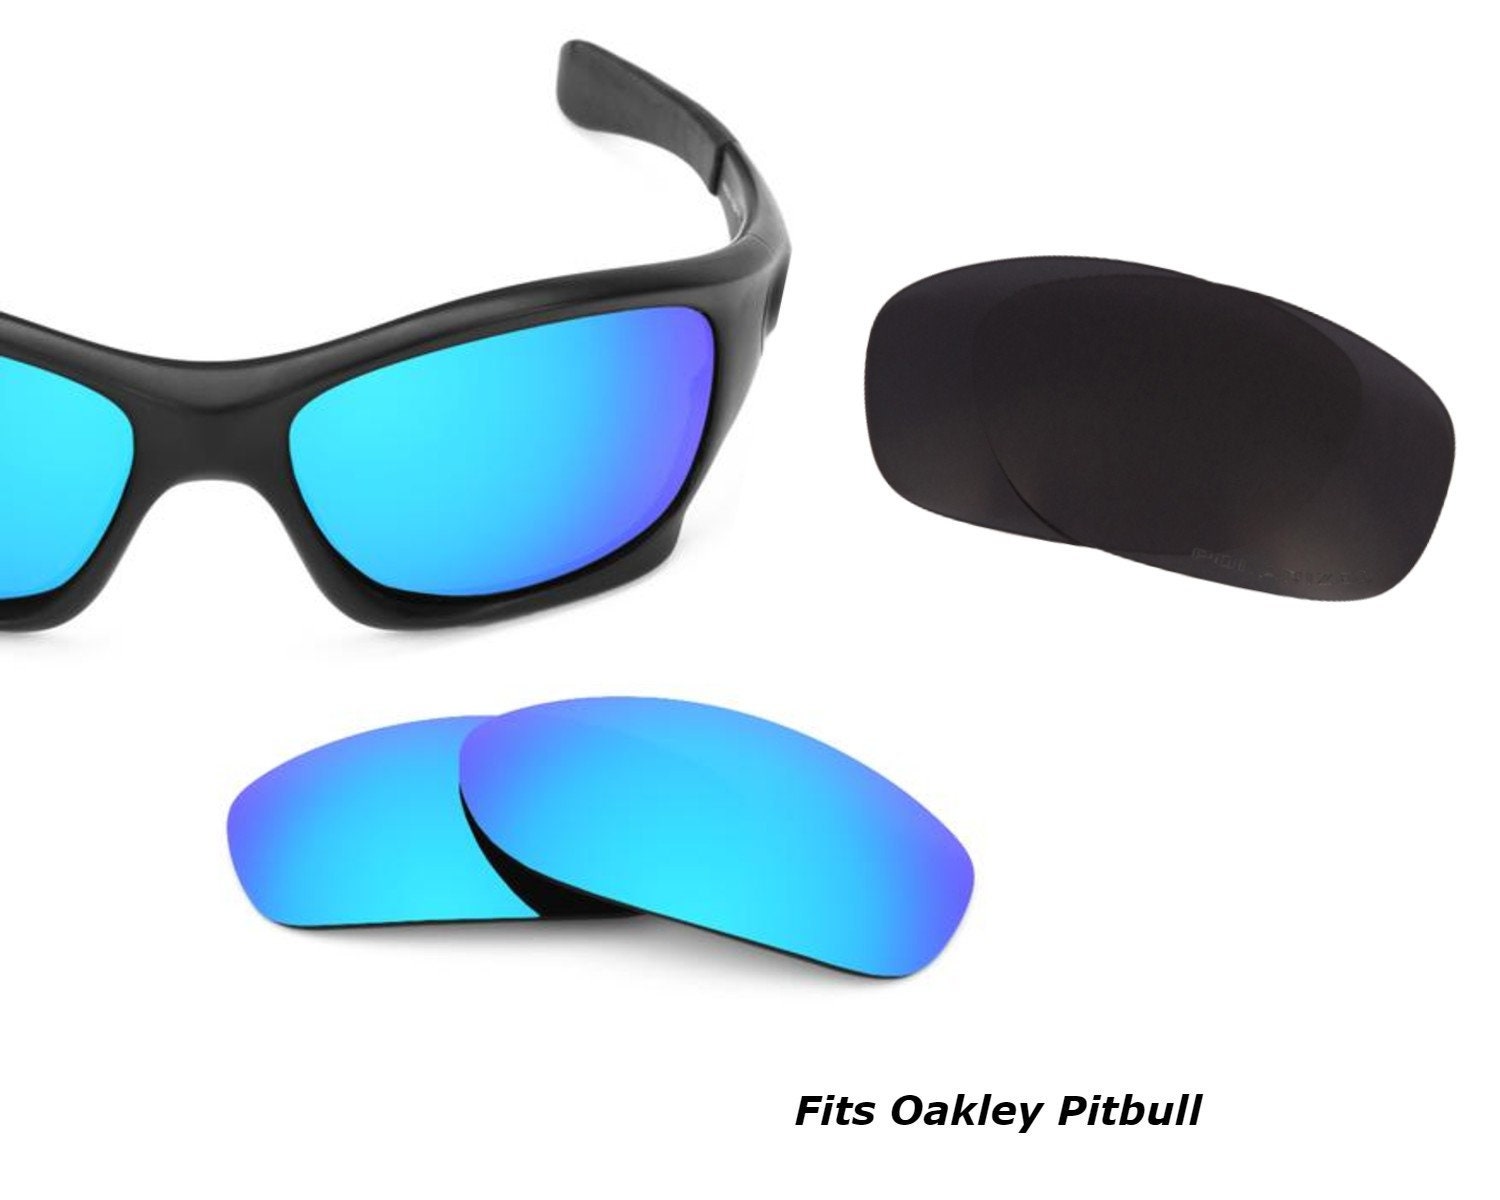 Fits Oakley Pit Bull Sunglass Lens Replacement Kit Repair Lens - Etsy